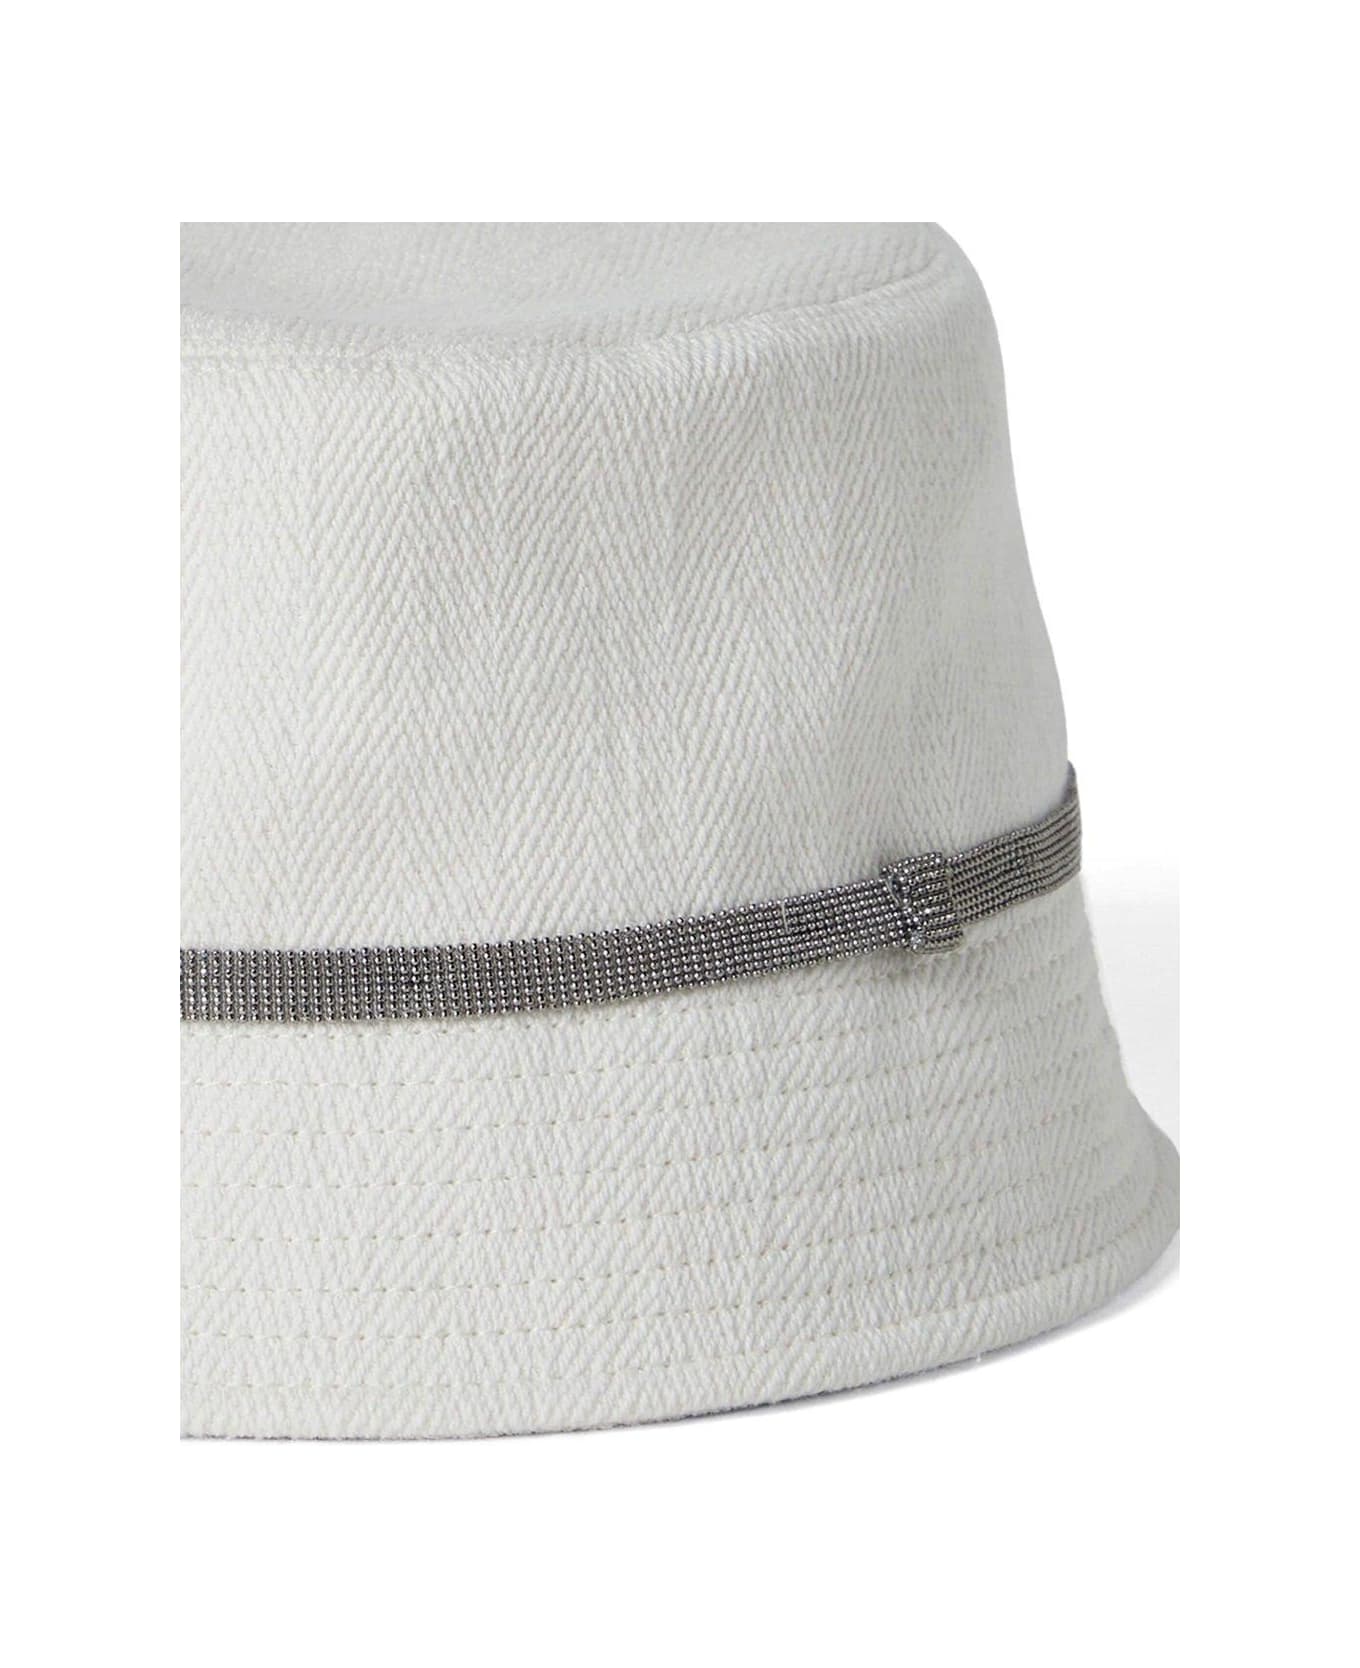 Brunello Cucinelli Bead-embellished Pull-on Bucket Hat - Panama